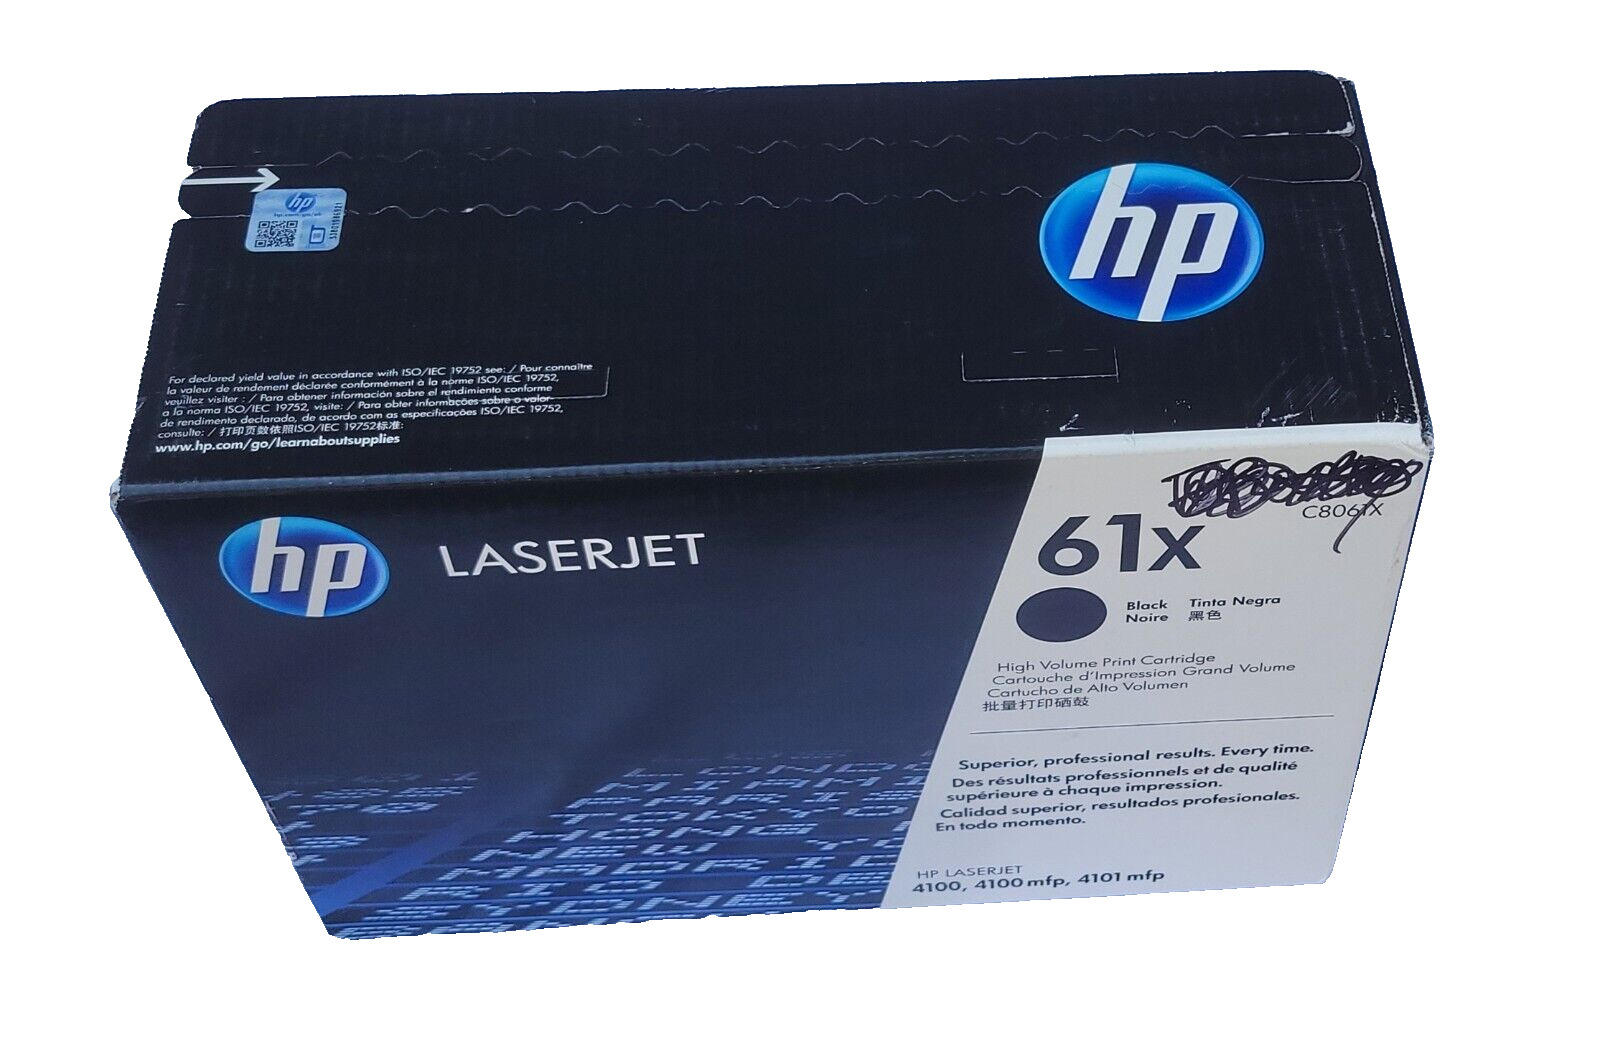 HP LASERJET 61X C8061X High Volume Black Toner Cartridge NEW SEALED Genuine OEM